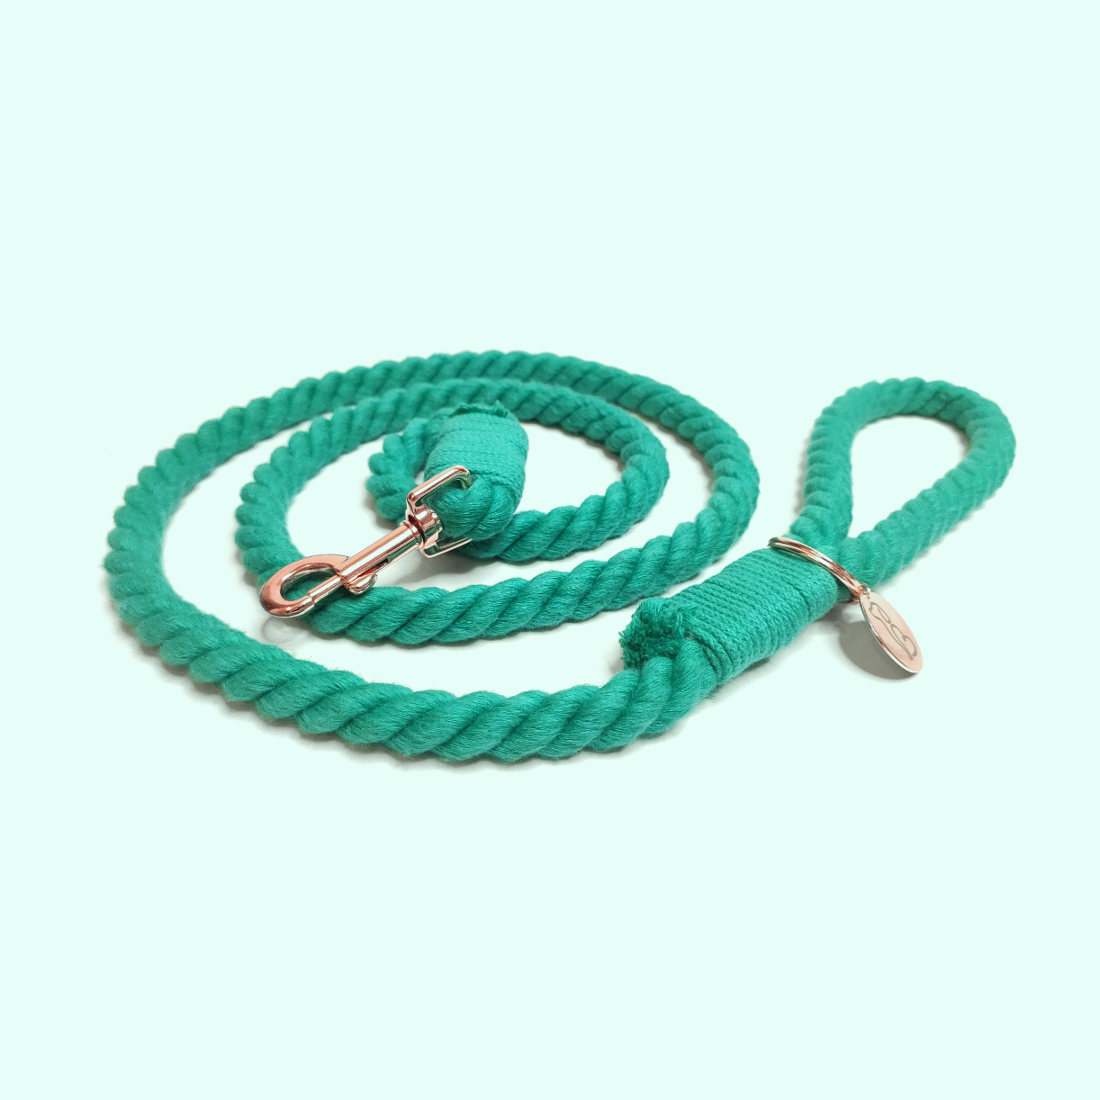 Emerald leash